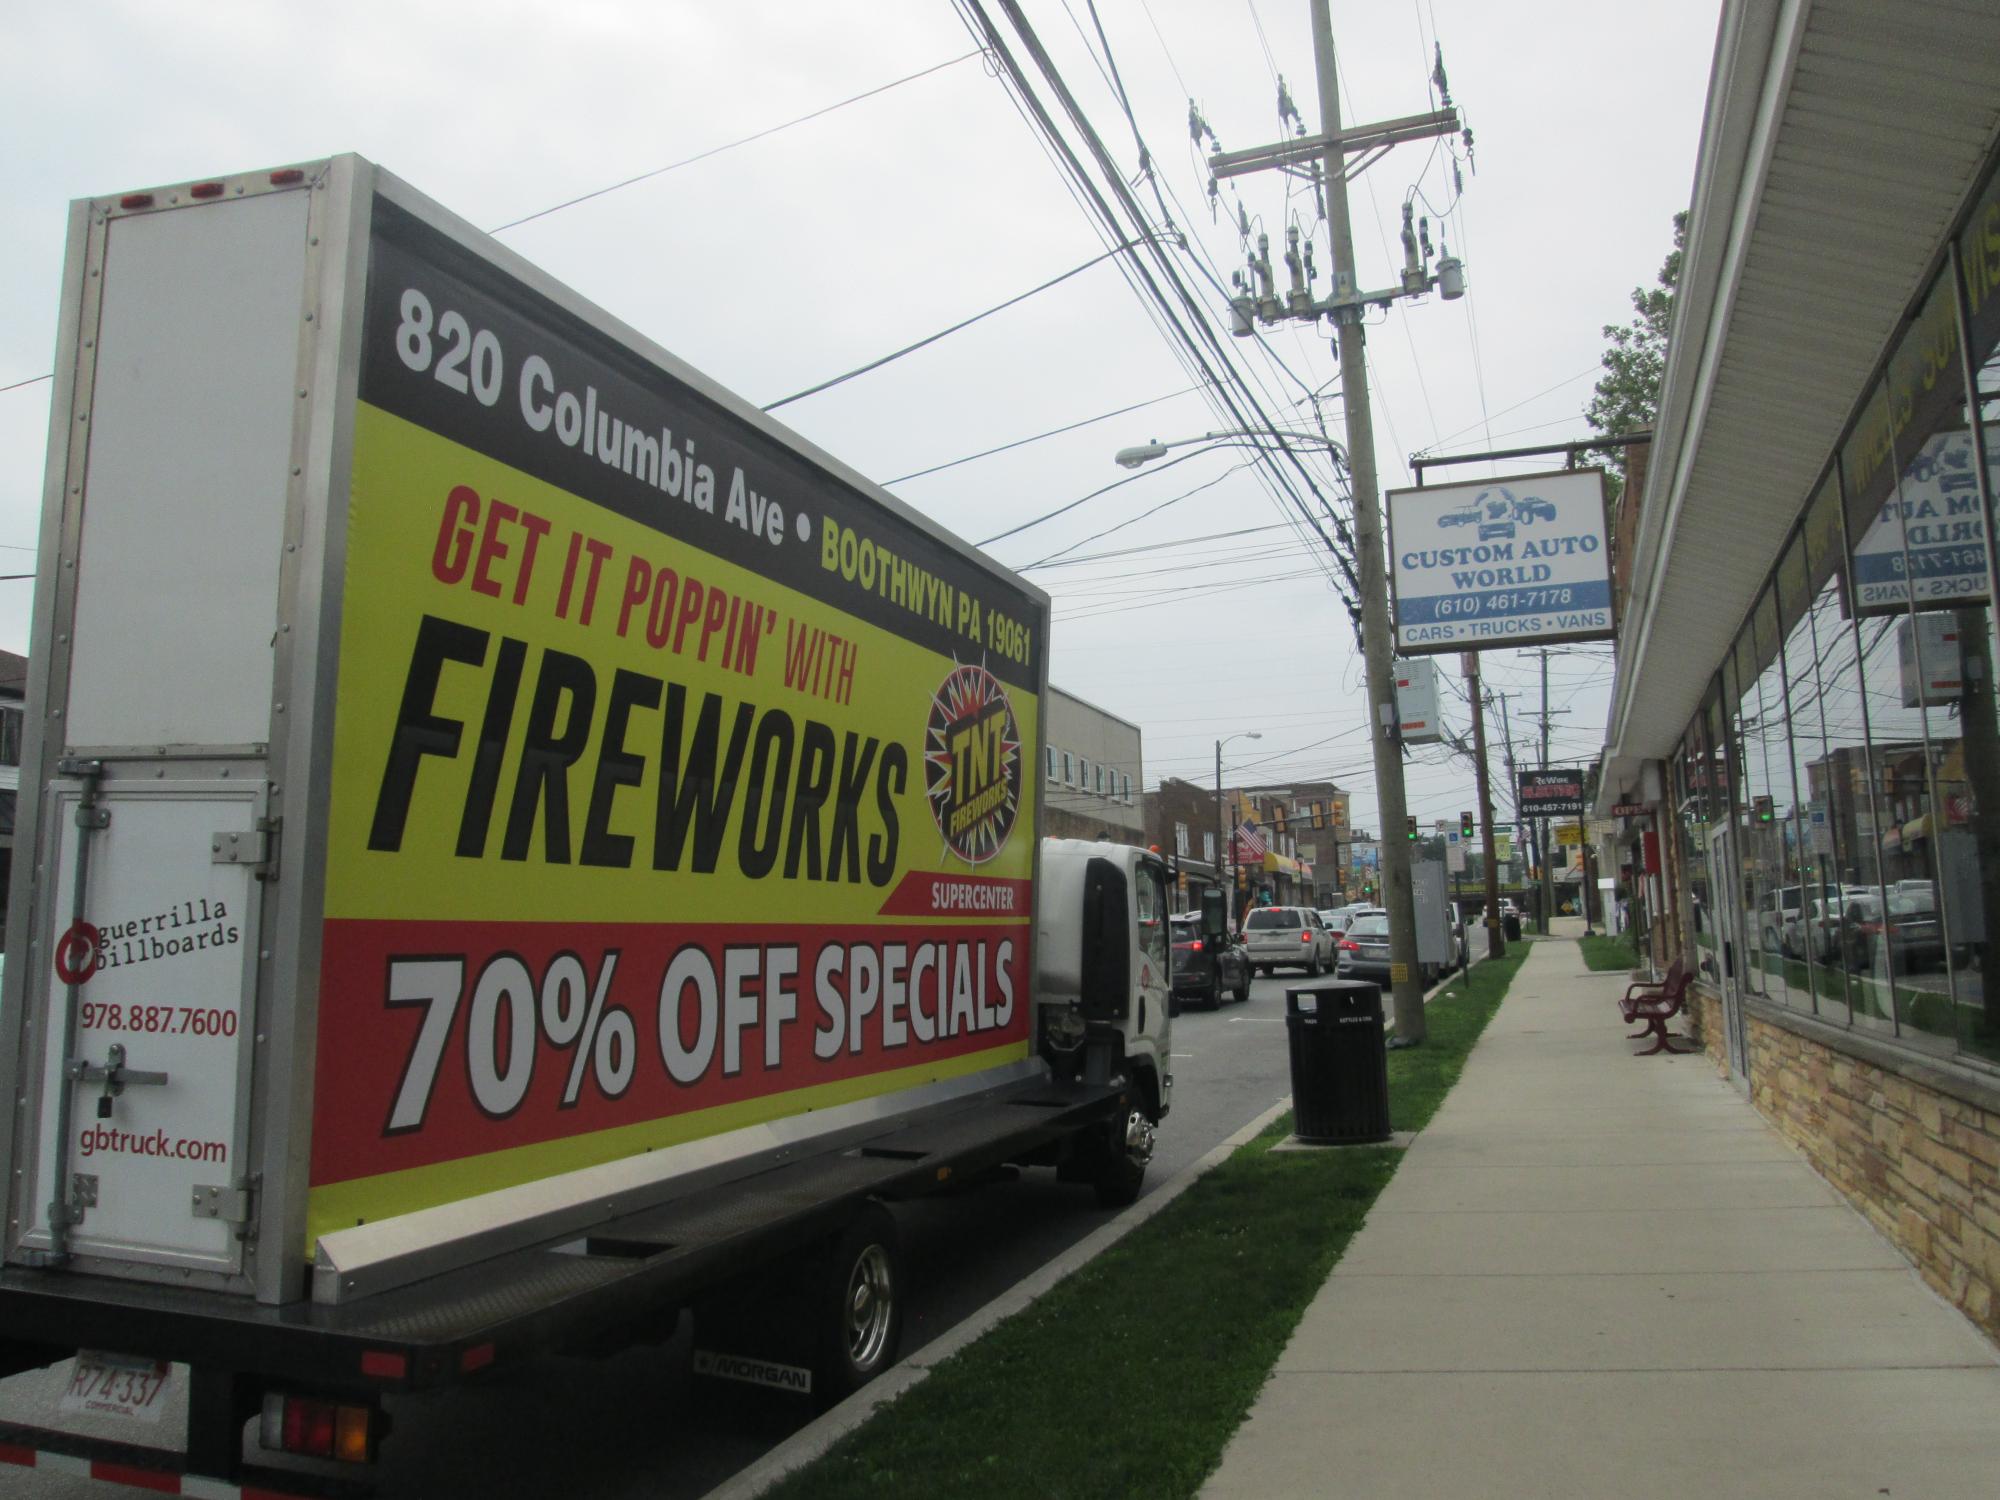 Mobile billboard truck in Philadelphia suburbs.